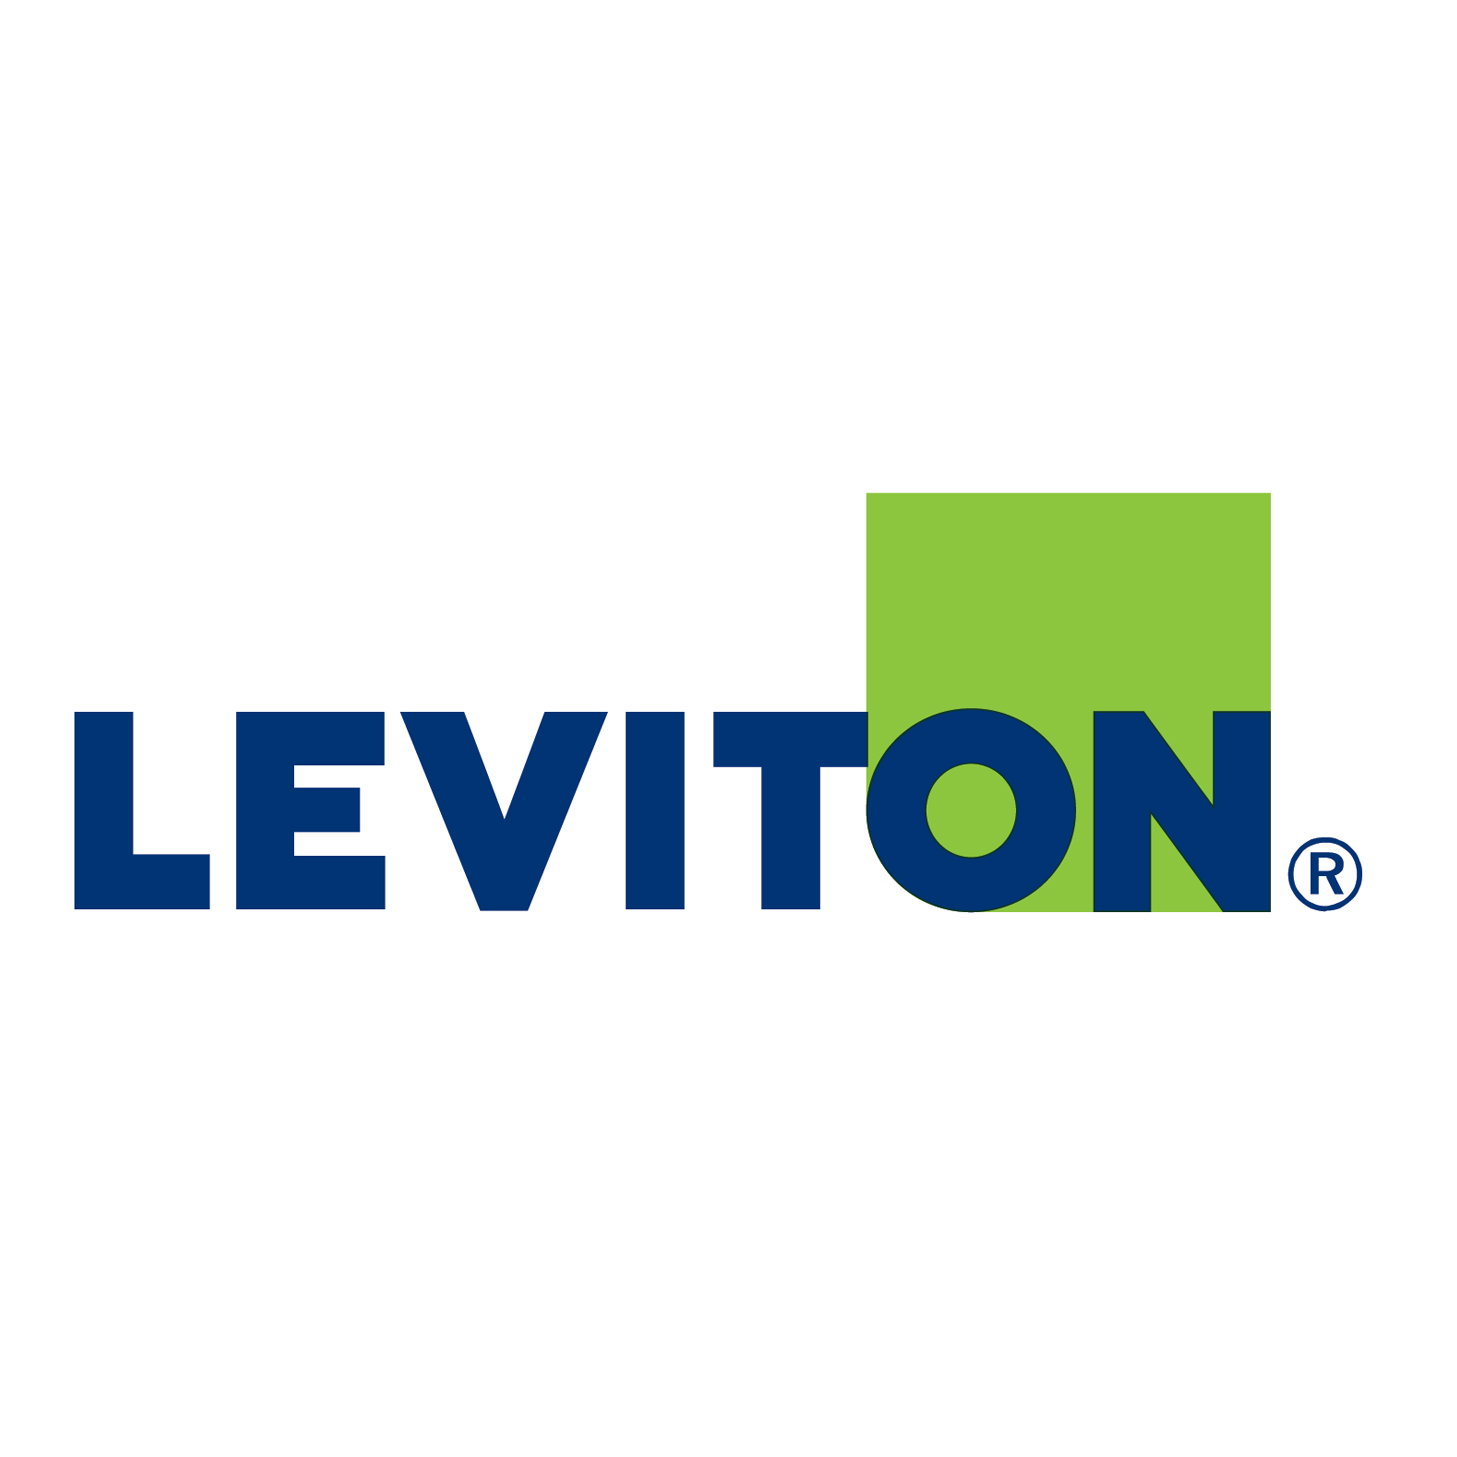 Leviton Logo 1457x1457.jpg